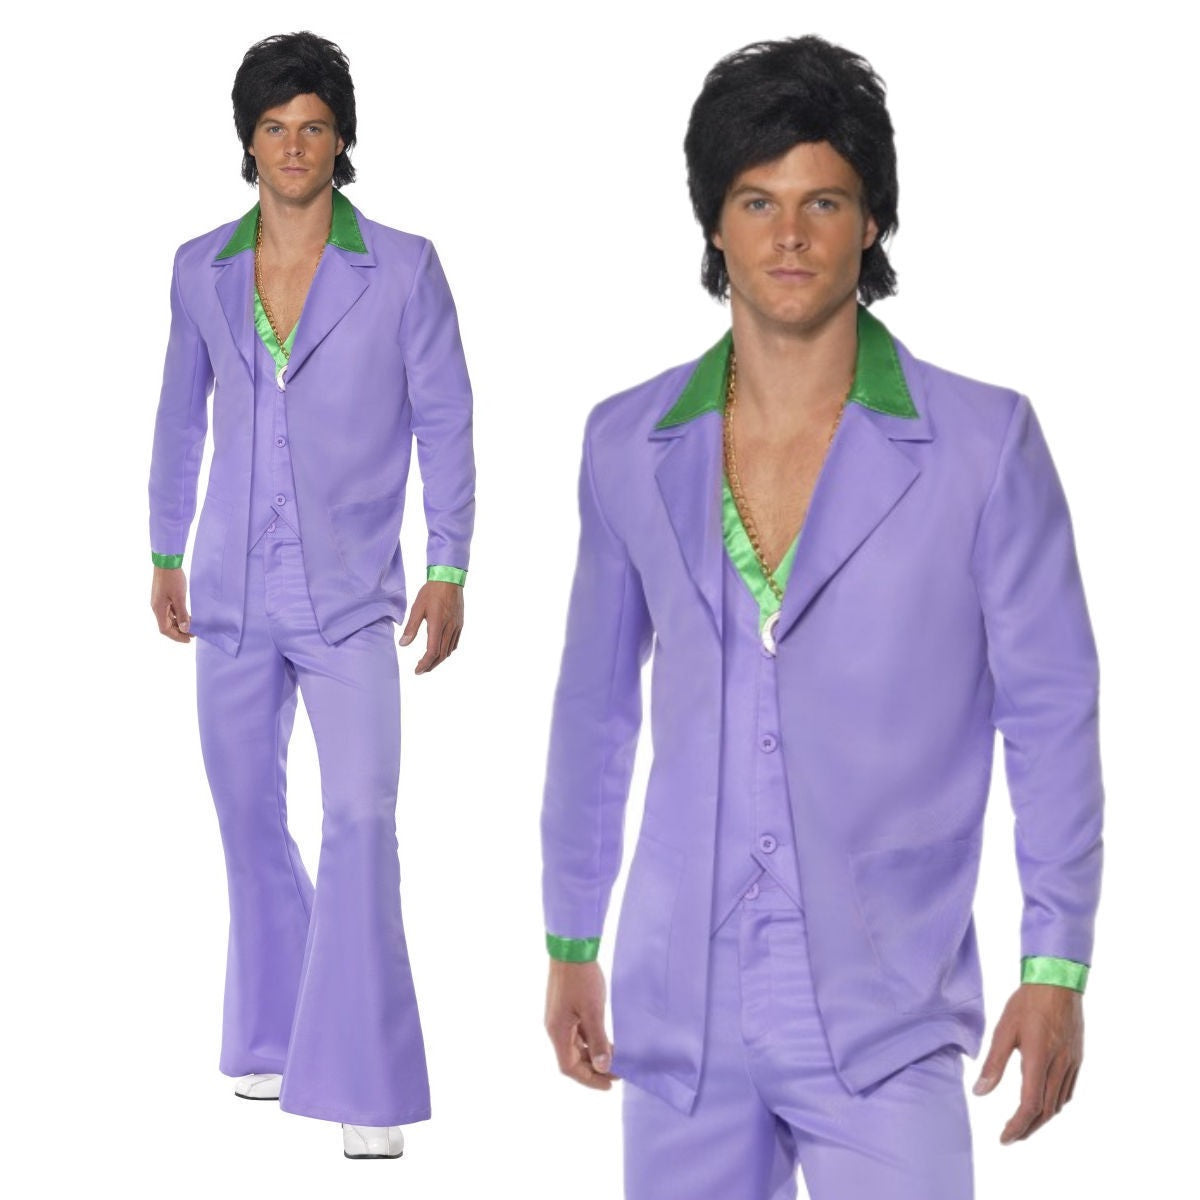 Lavender 1970's Suit Costume